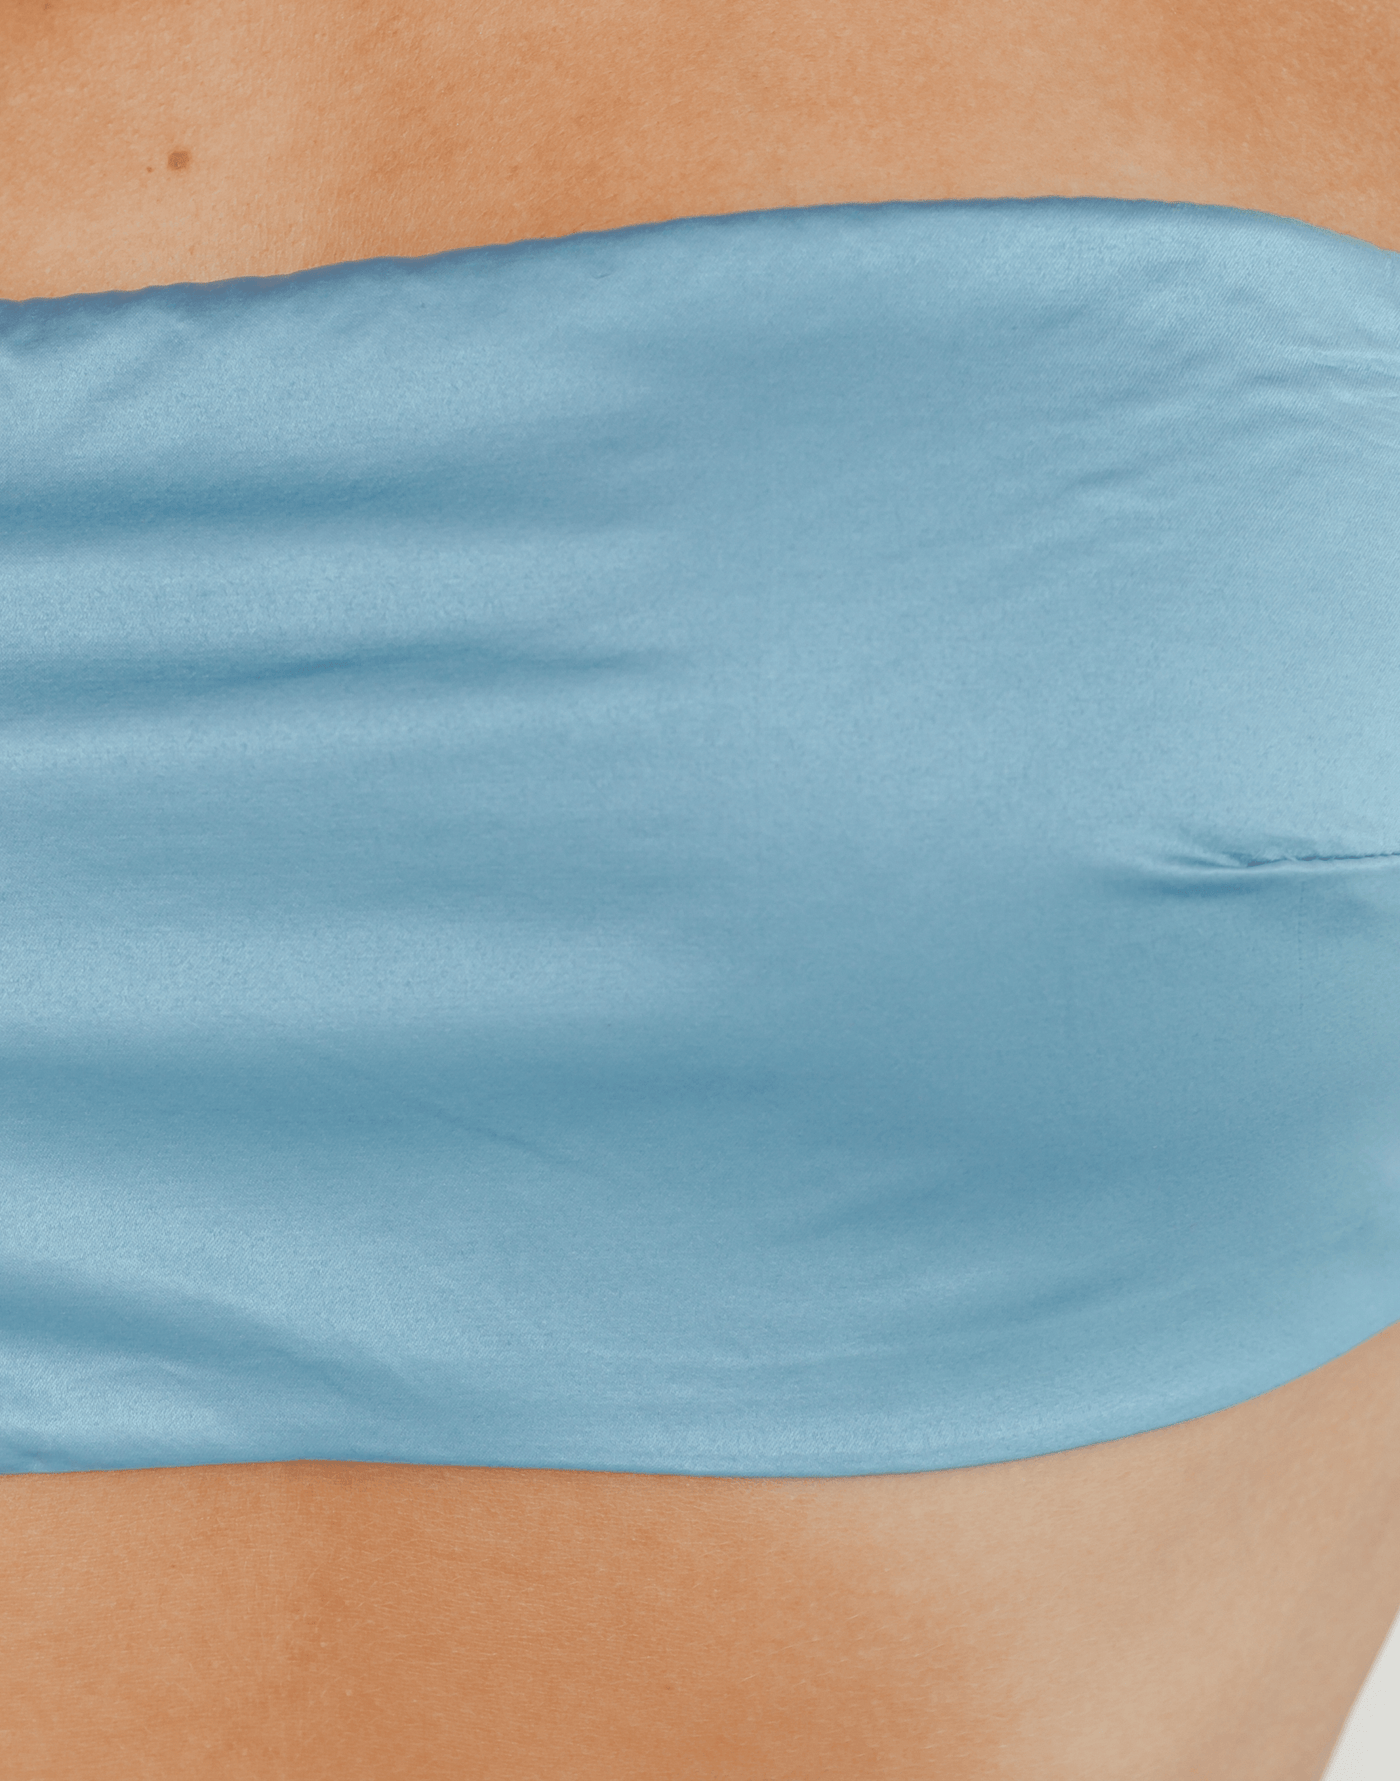 Da Vinci Crop Top (Blue) - Silky Bandeau Crop Top - Women's Top - Charcoal Clothing